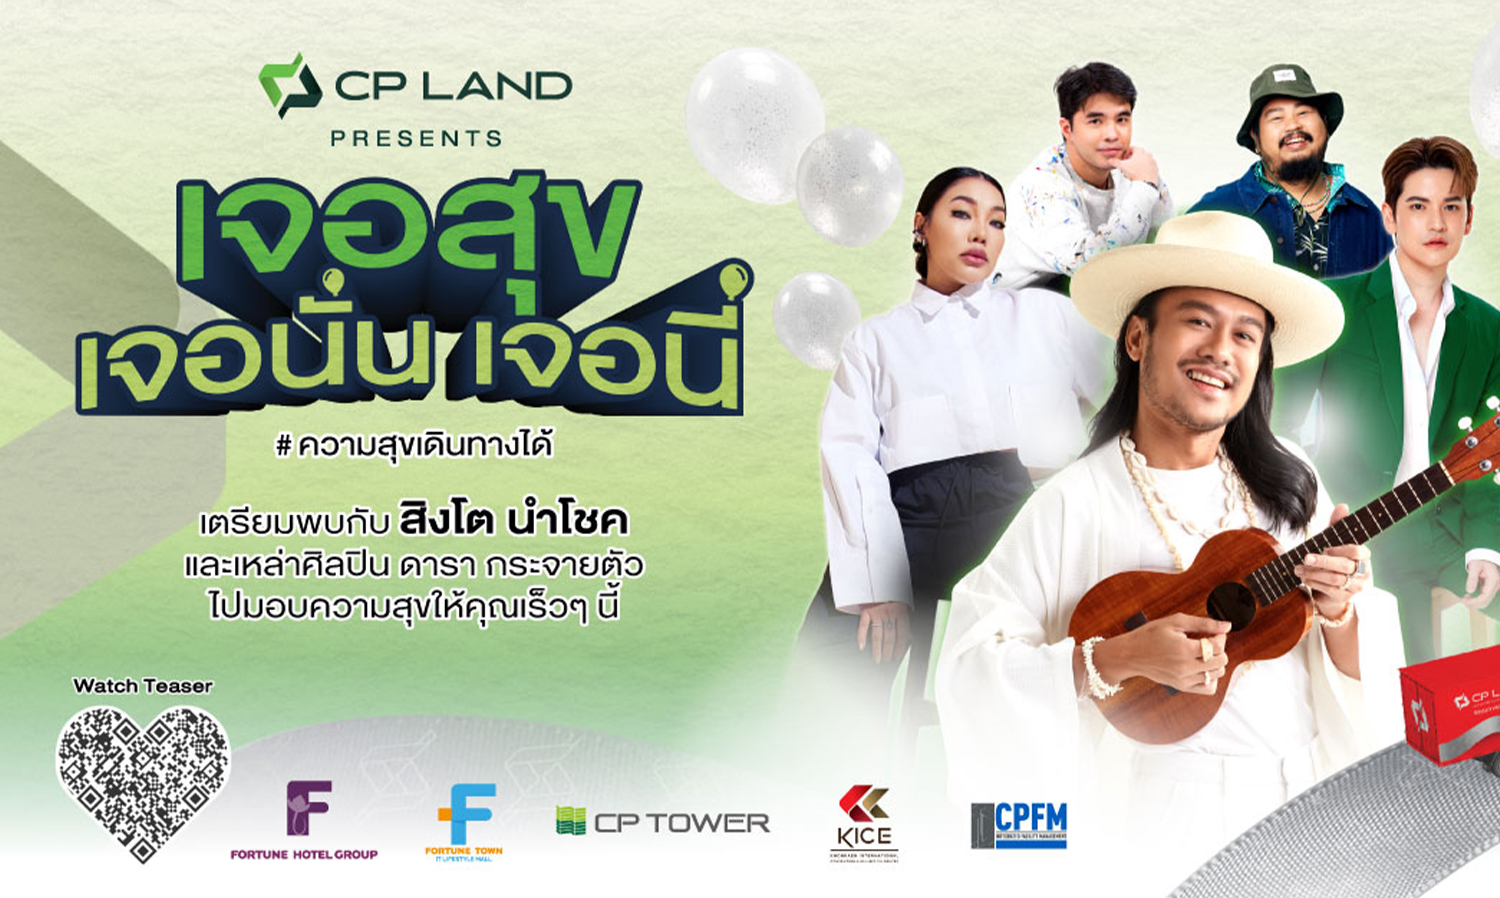 CP LAND Presents เจอสุข เจอนั่น เจอนี่ CP LAND X สิงโต นำโชค ต่อยอดภาพโฆษณาให้เกิดขึ้นจริง ขนทัพคาราวานส่งความสุขทั่วไทย